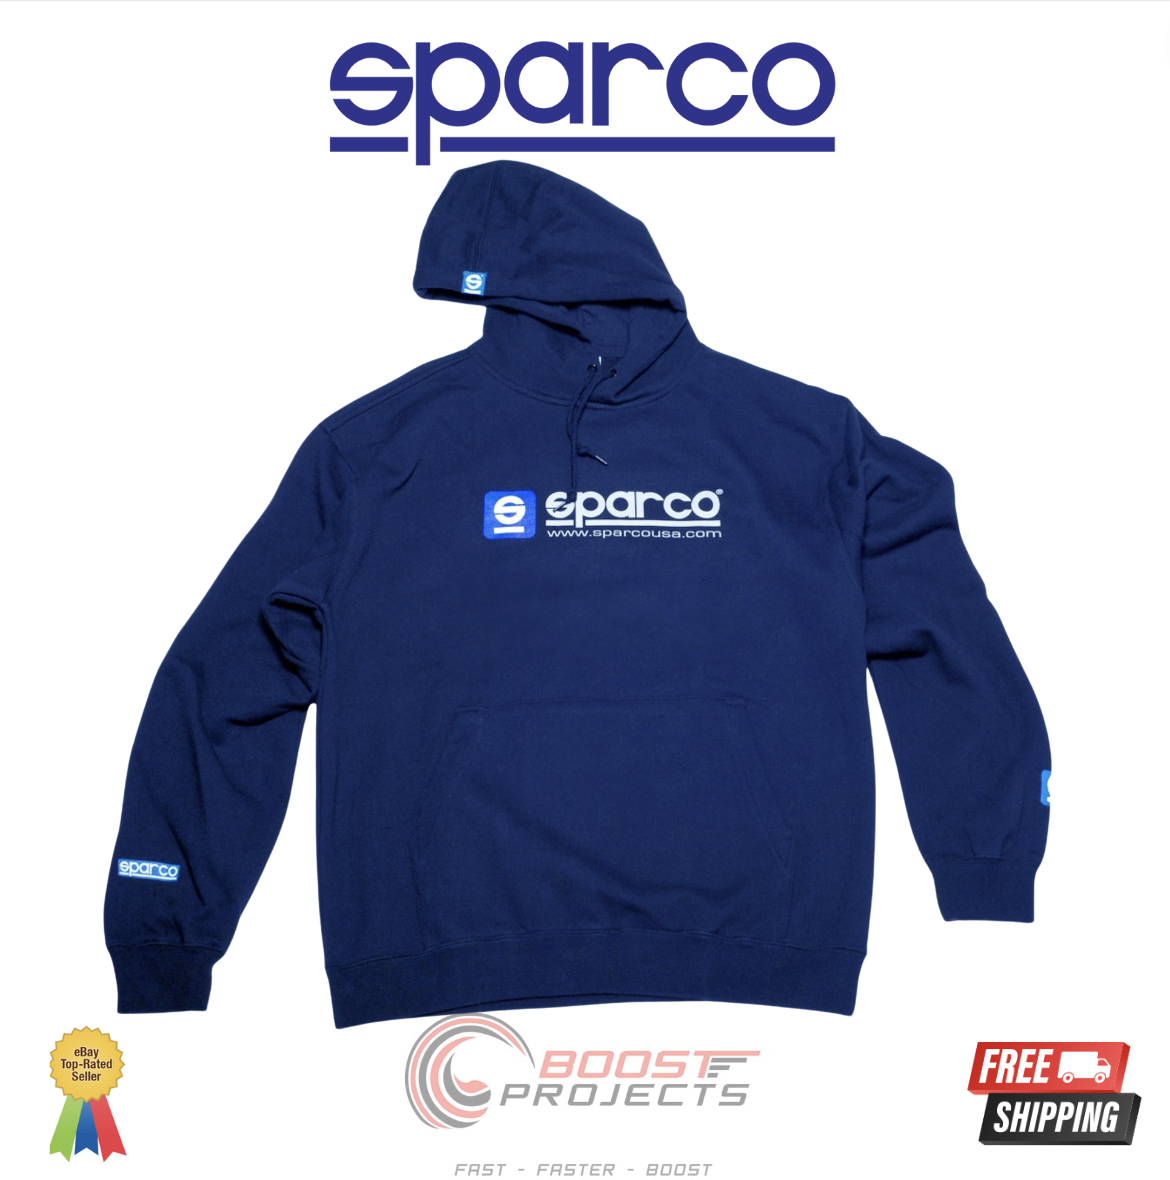 Sparco SPASP03100NR3L Hooded Pre-shrunk Cotton Sweatshirt Black Red Blue Large Medium x large XL